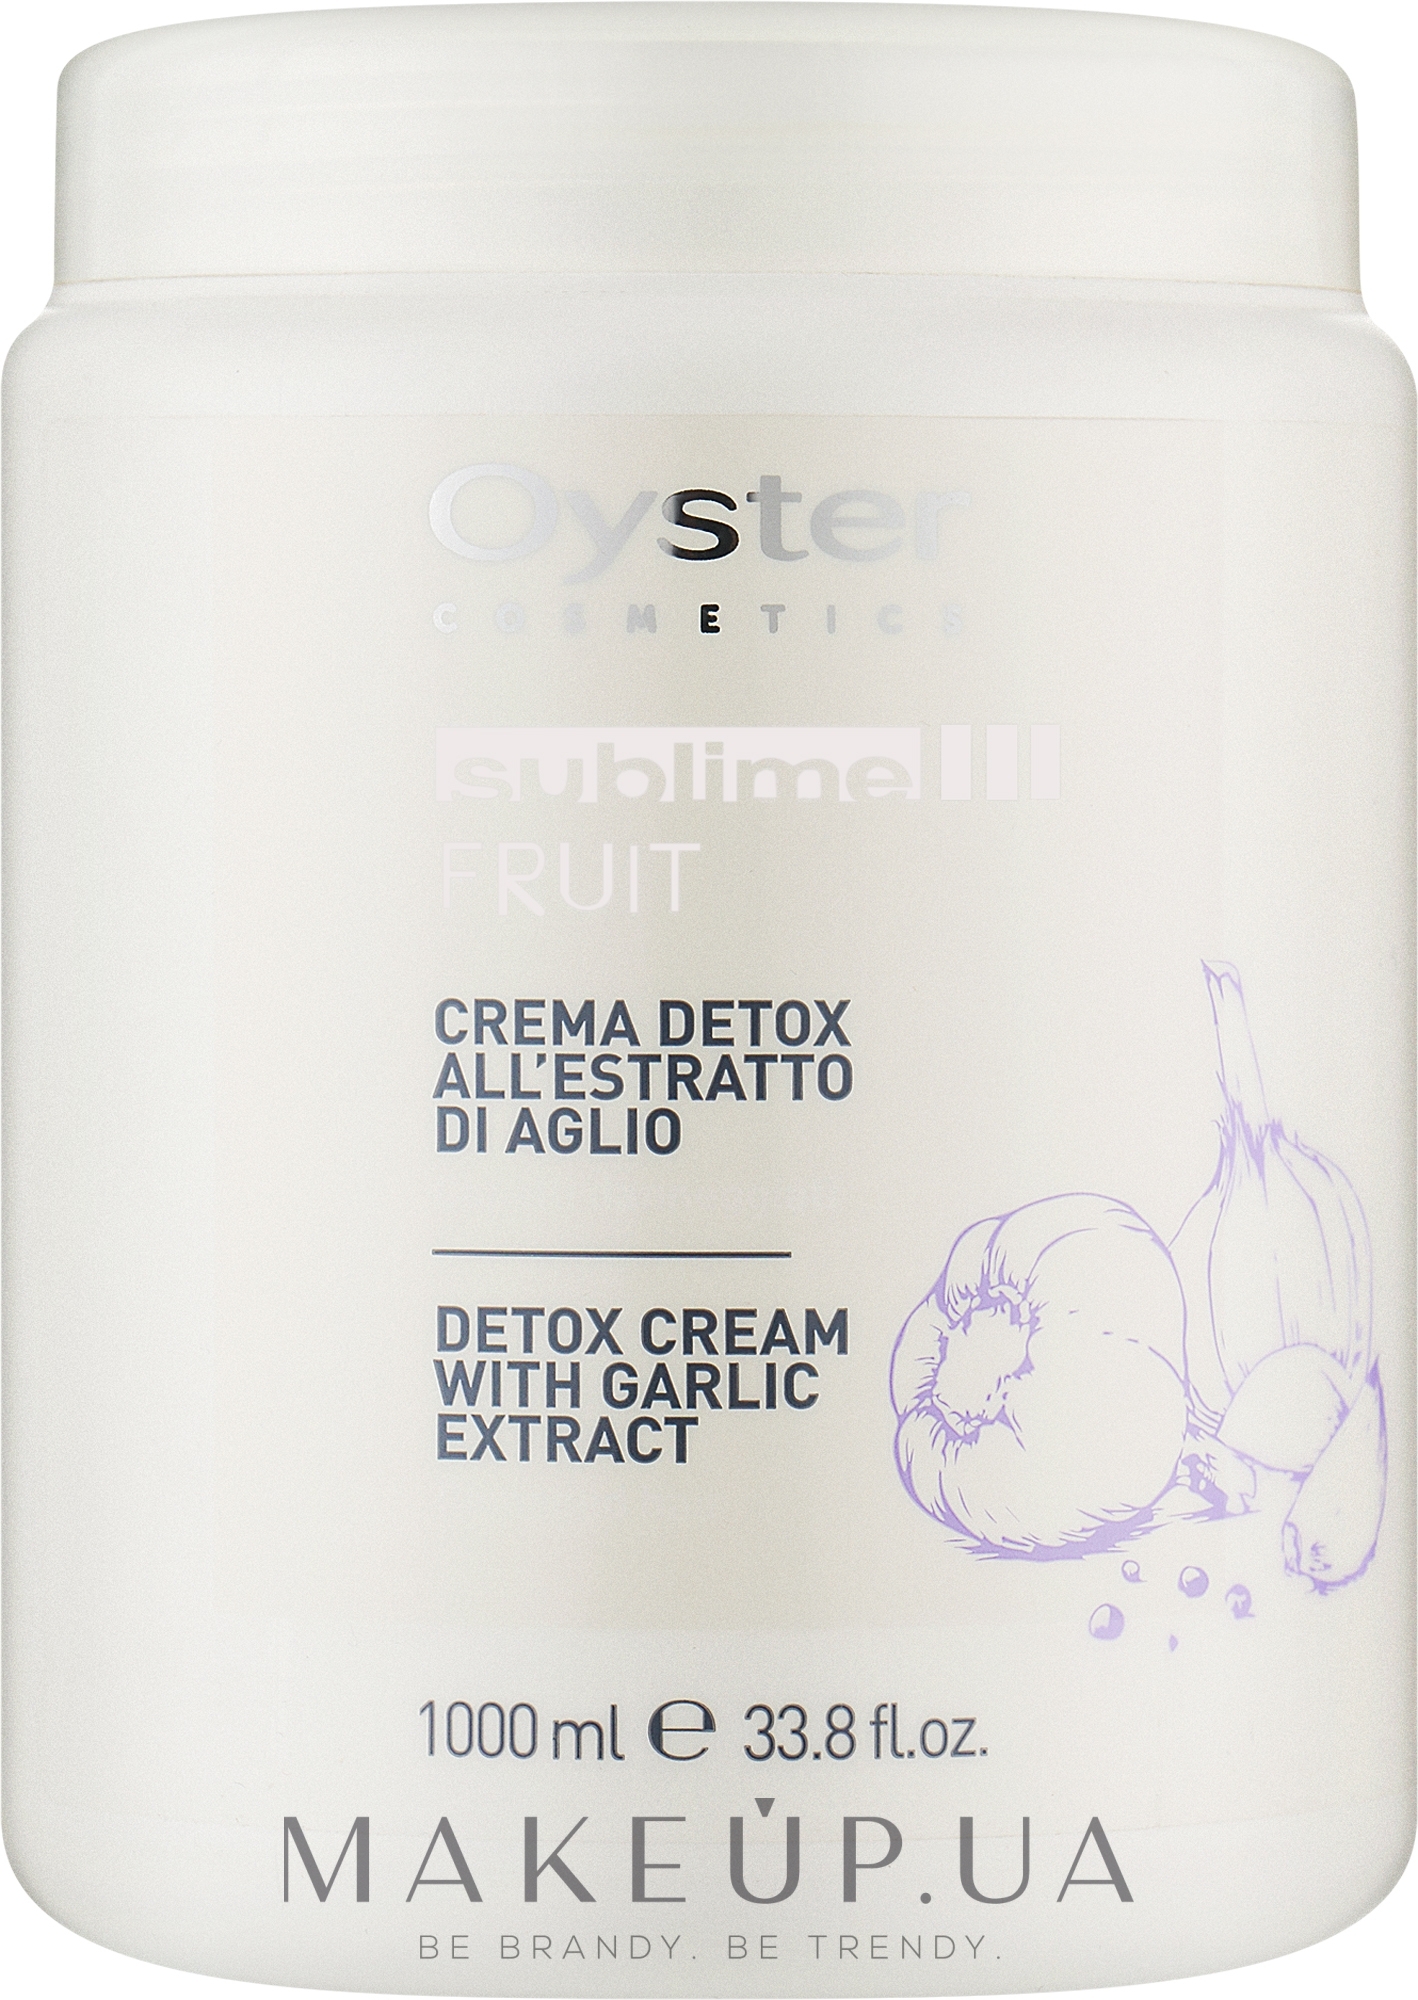 Часникова детокс-маска для пошкодженого волосся - Oyster Cosmetics Sublime Fruit Detox Cream With Garlic Extract — фото 1000ml